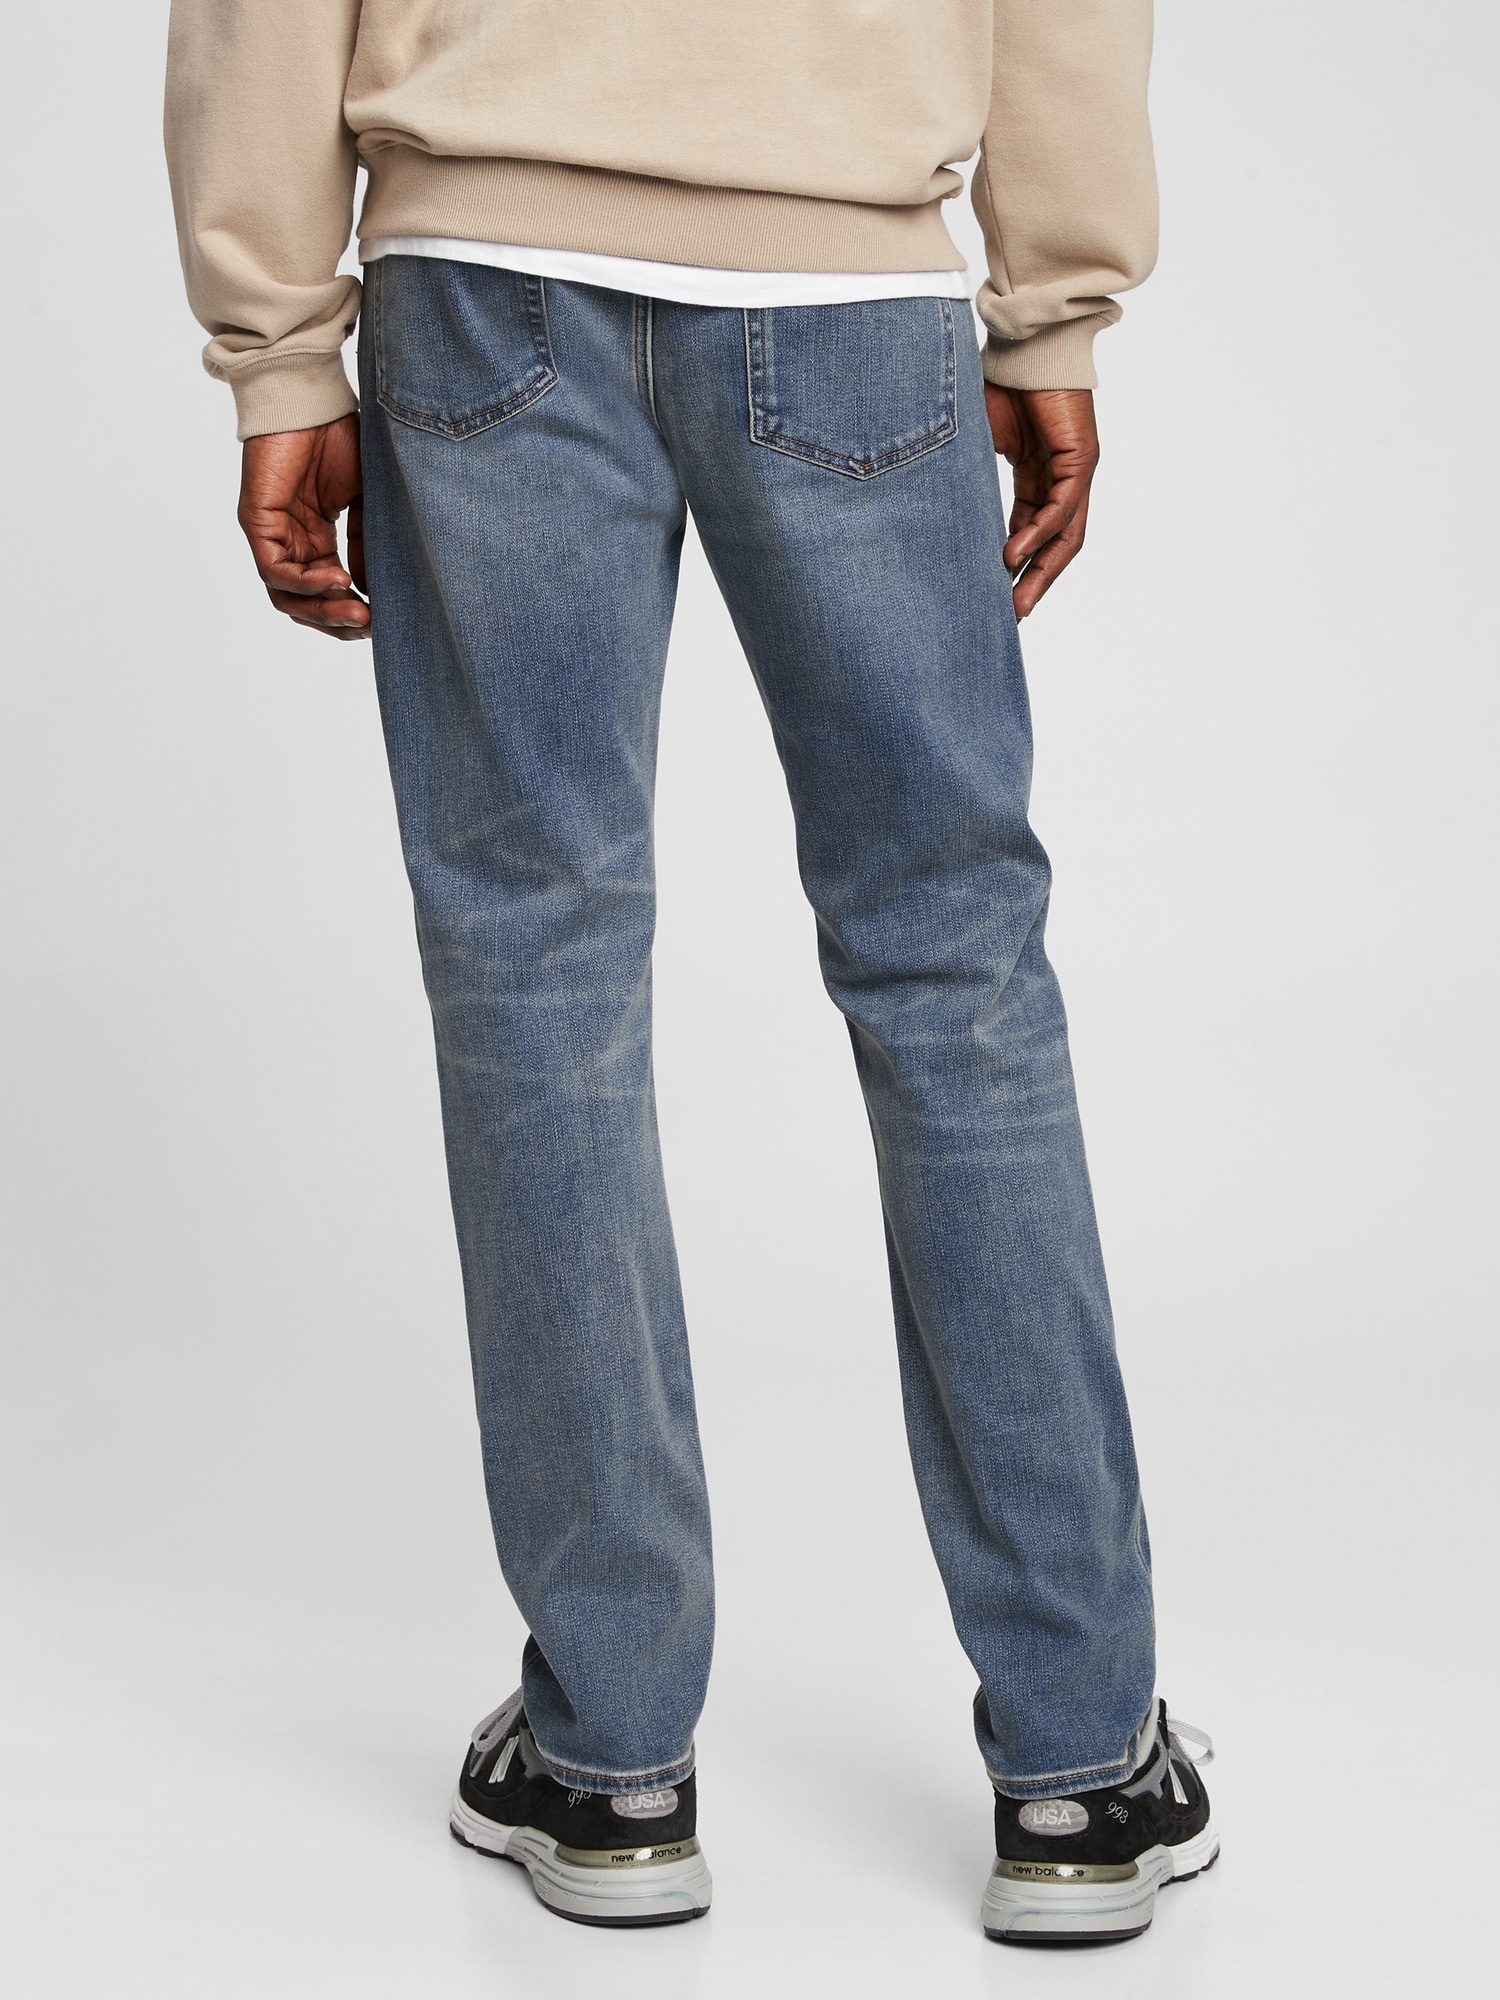 GAP - Soft Wear Vintage Jeans